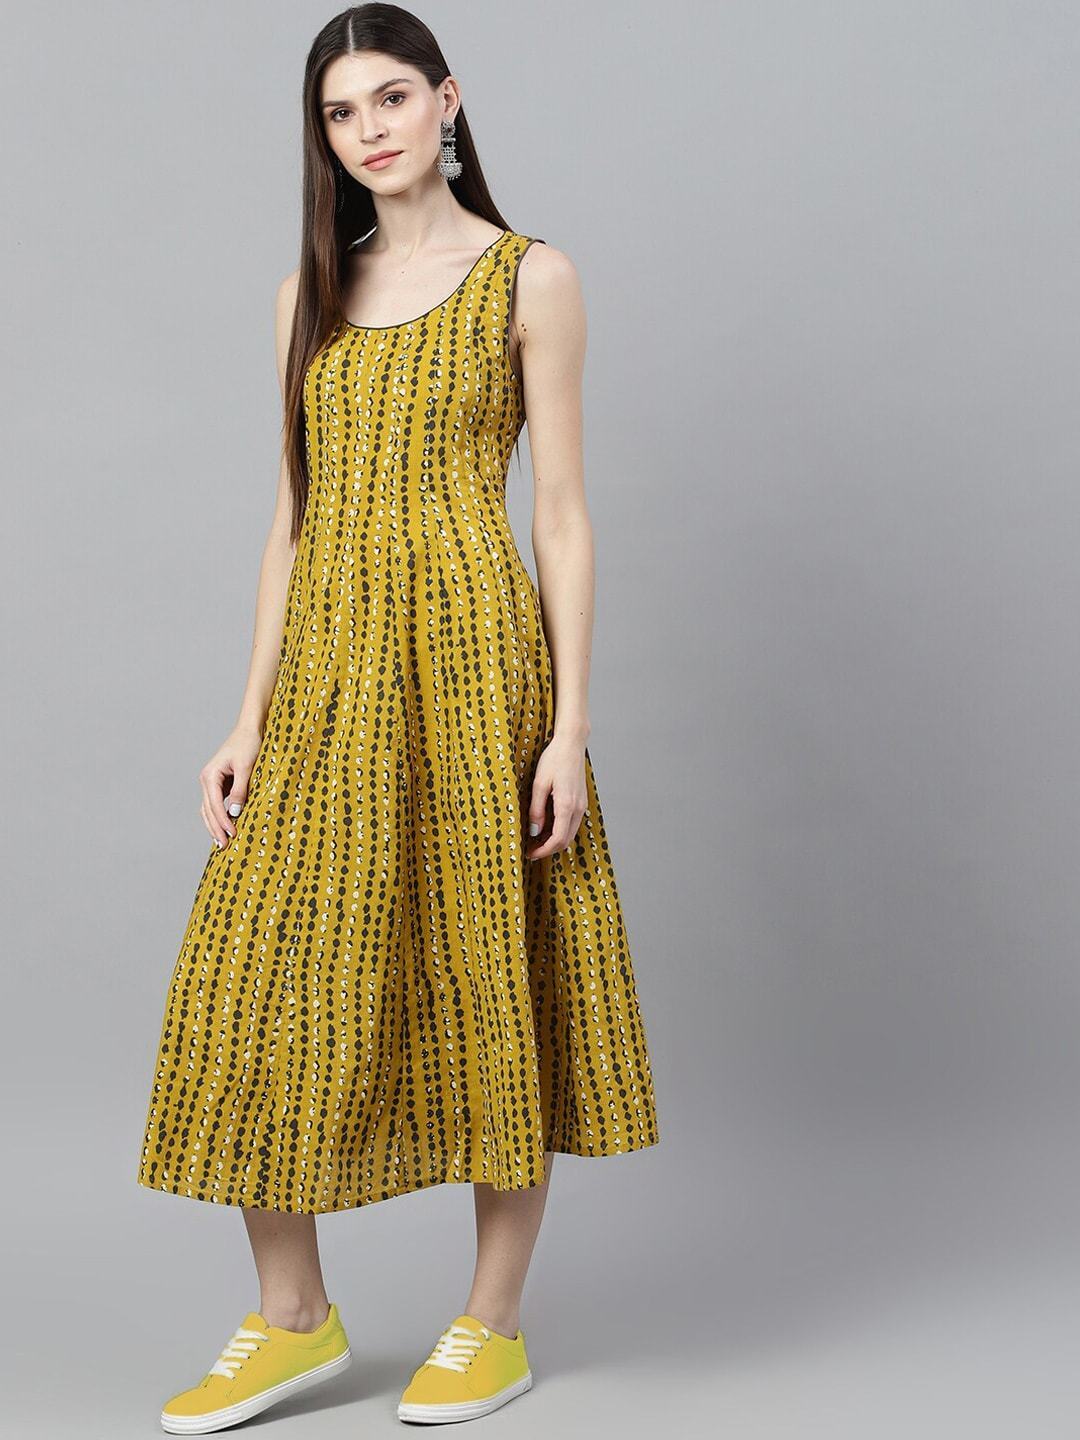 Women's  Mustard Printed A-Line Dress - AKS